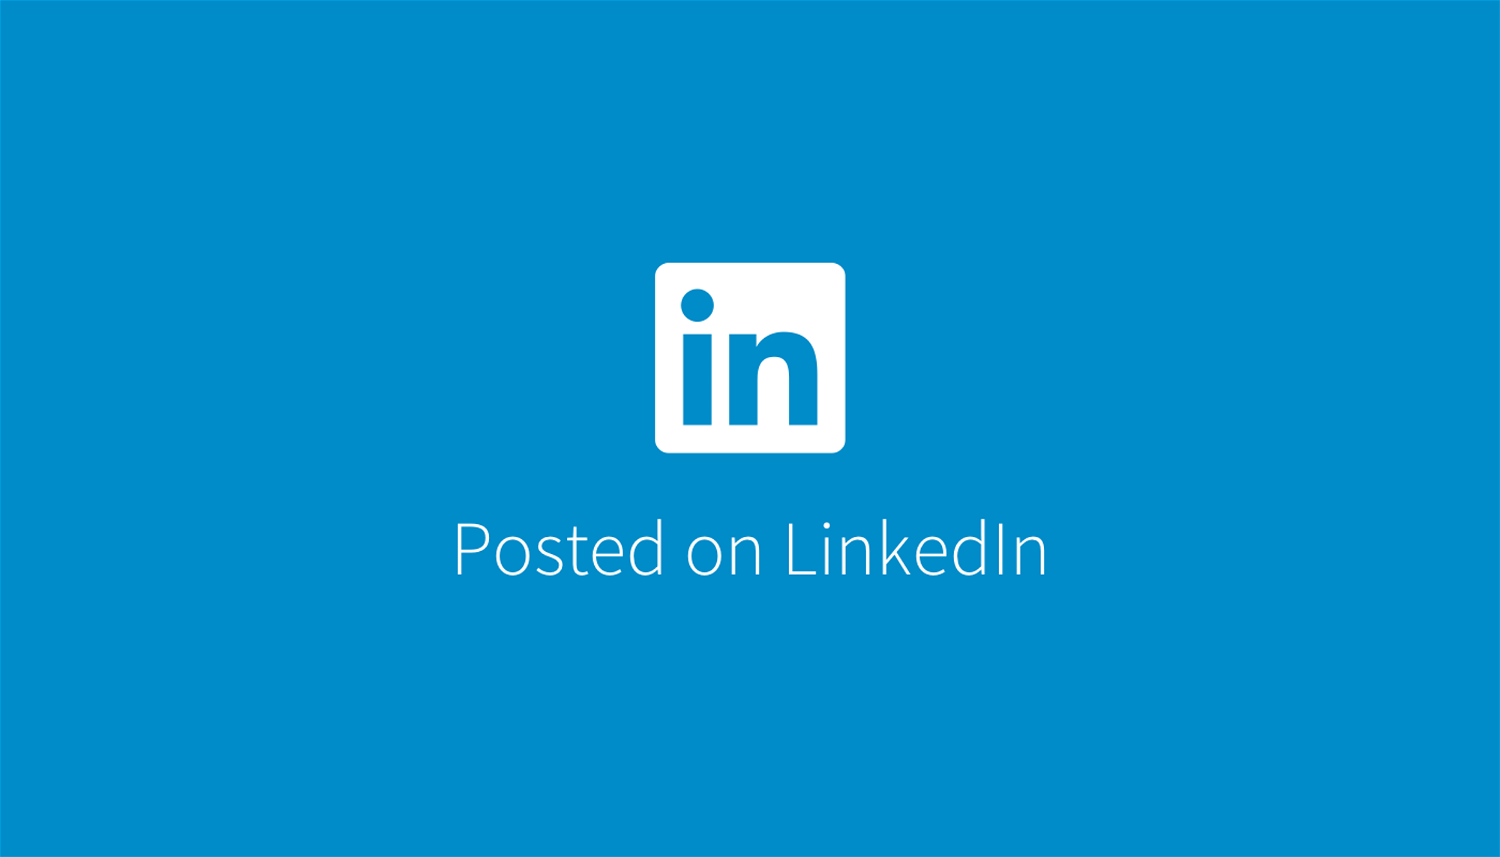 Lokesh Gupta on LinkedIn: ProductHood Challenges